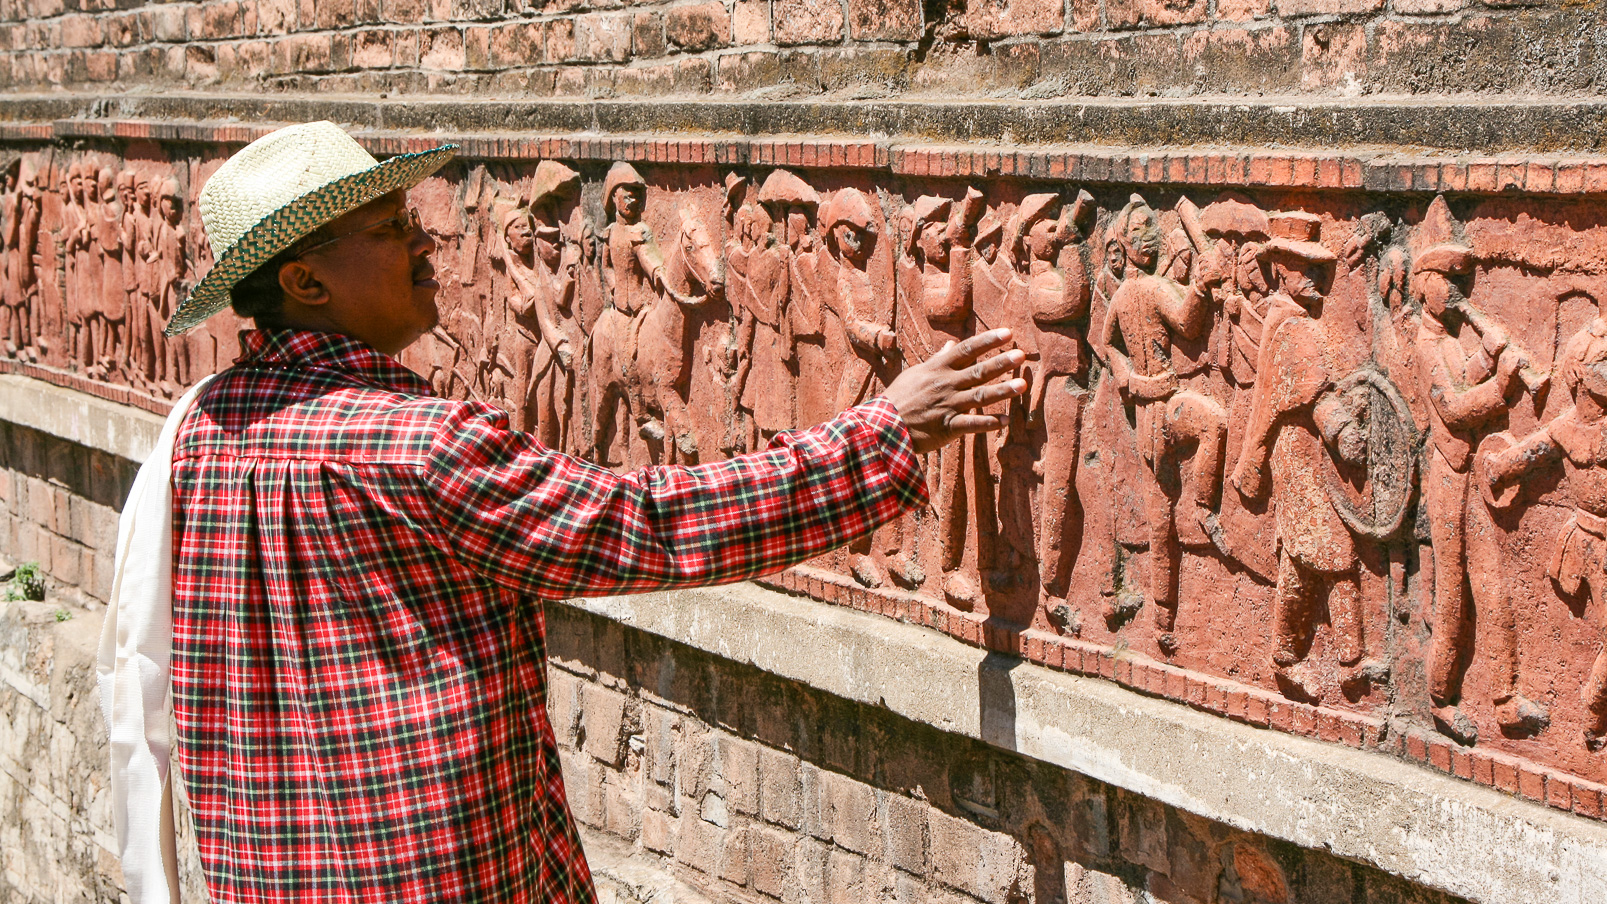 Bas-relief racontant l'histoire de Madagascar.